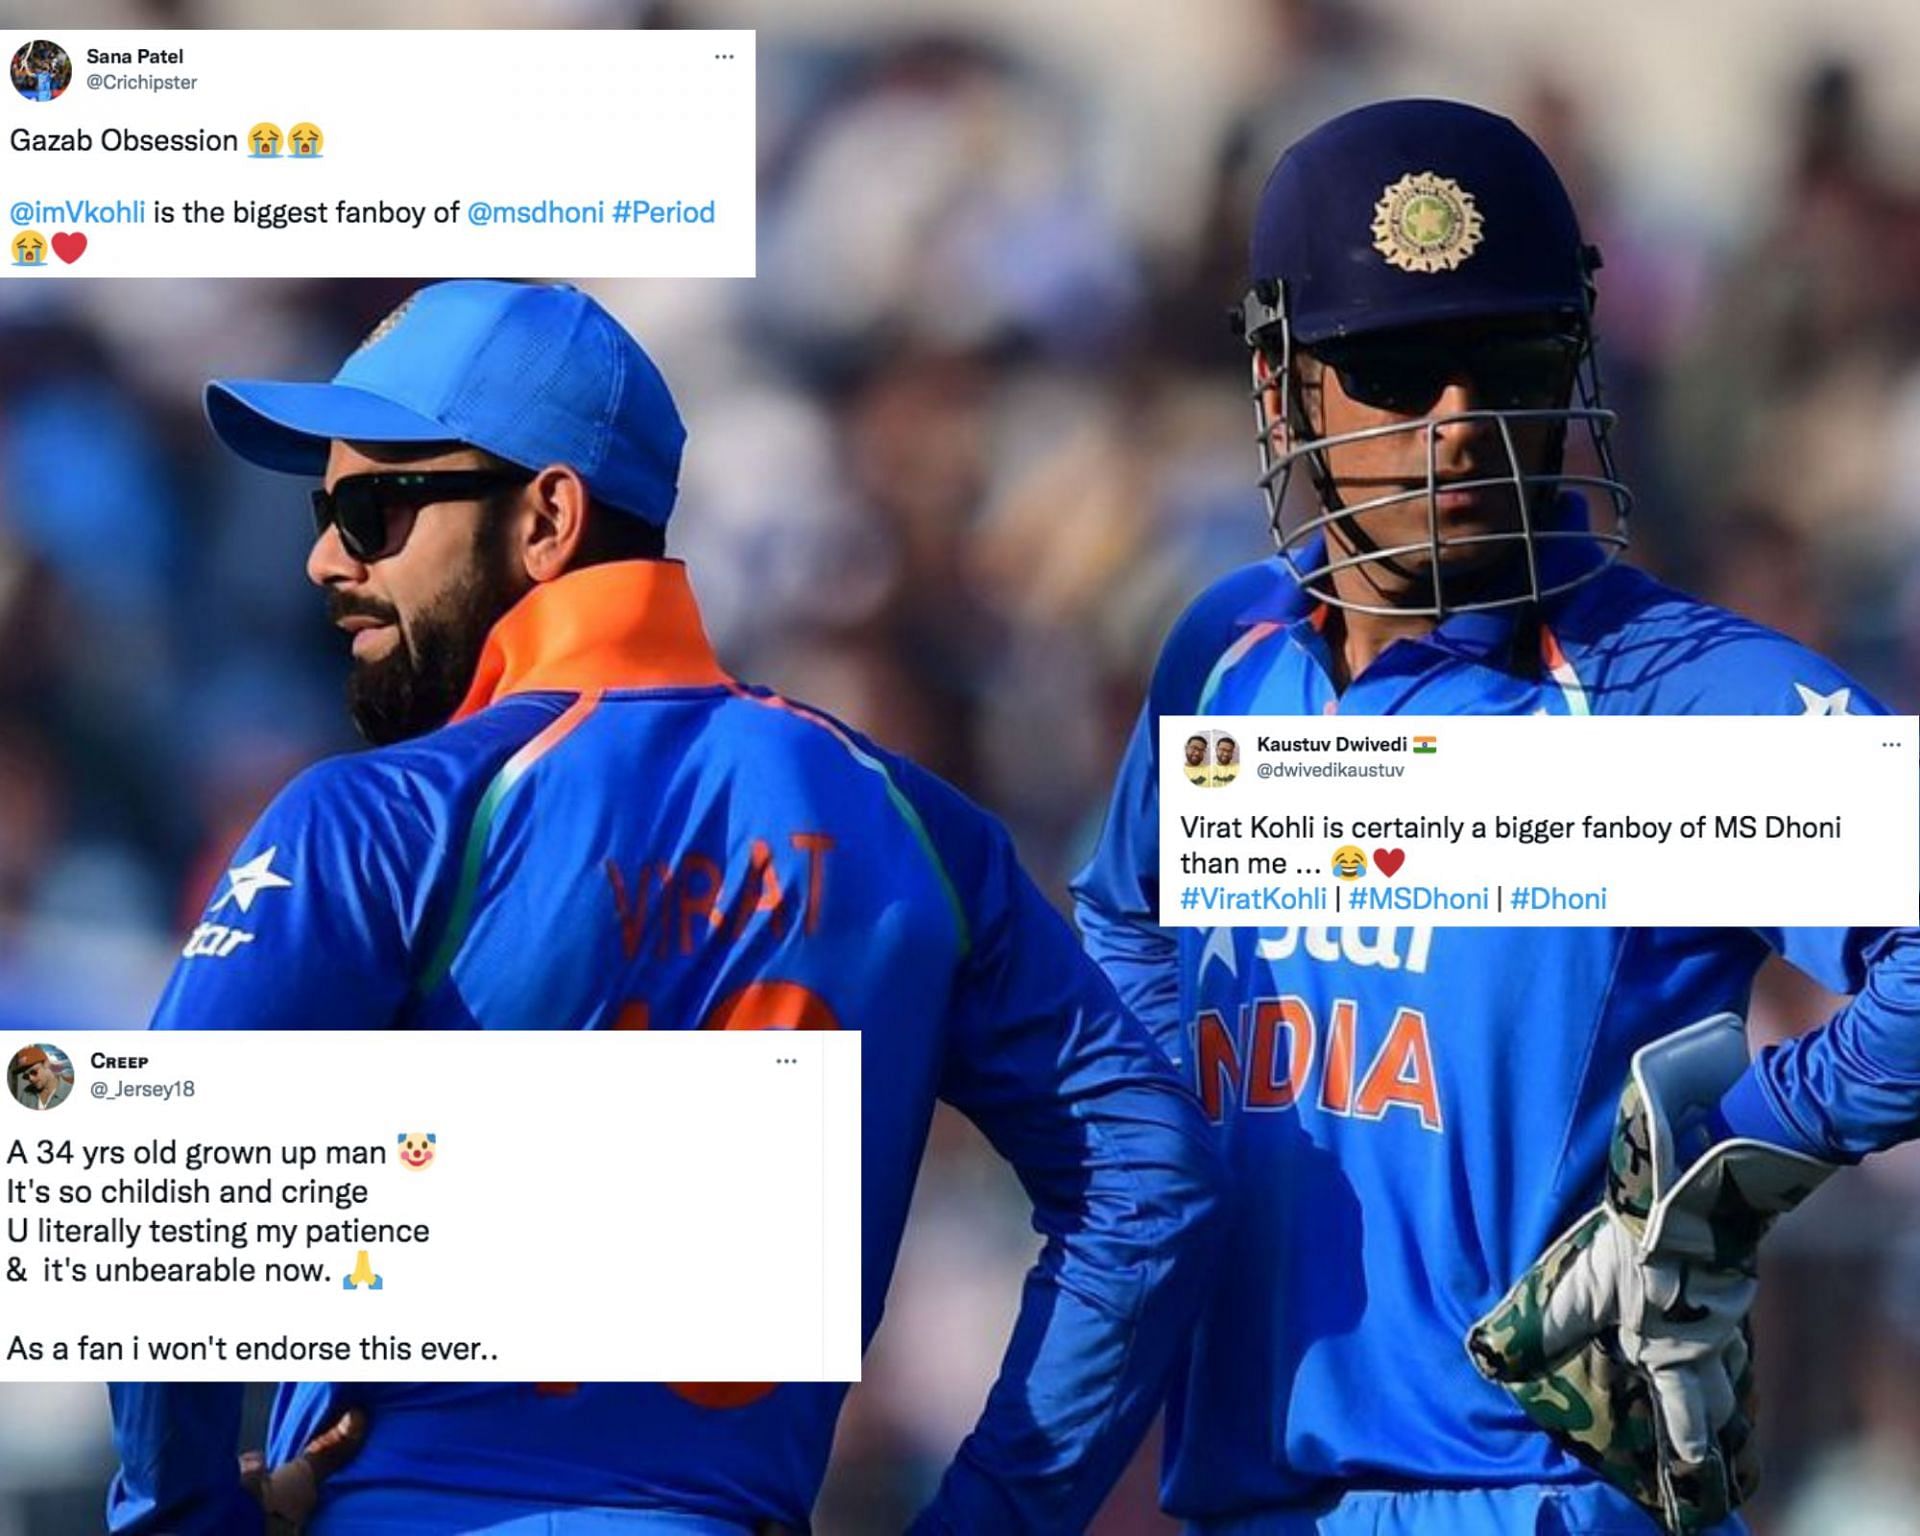 Childish and cringe' - Fans criticize Virat Kohli for his Instagram post on  MS Dhoni